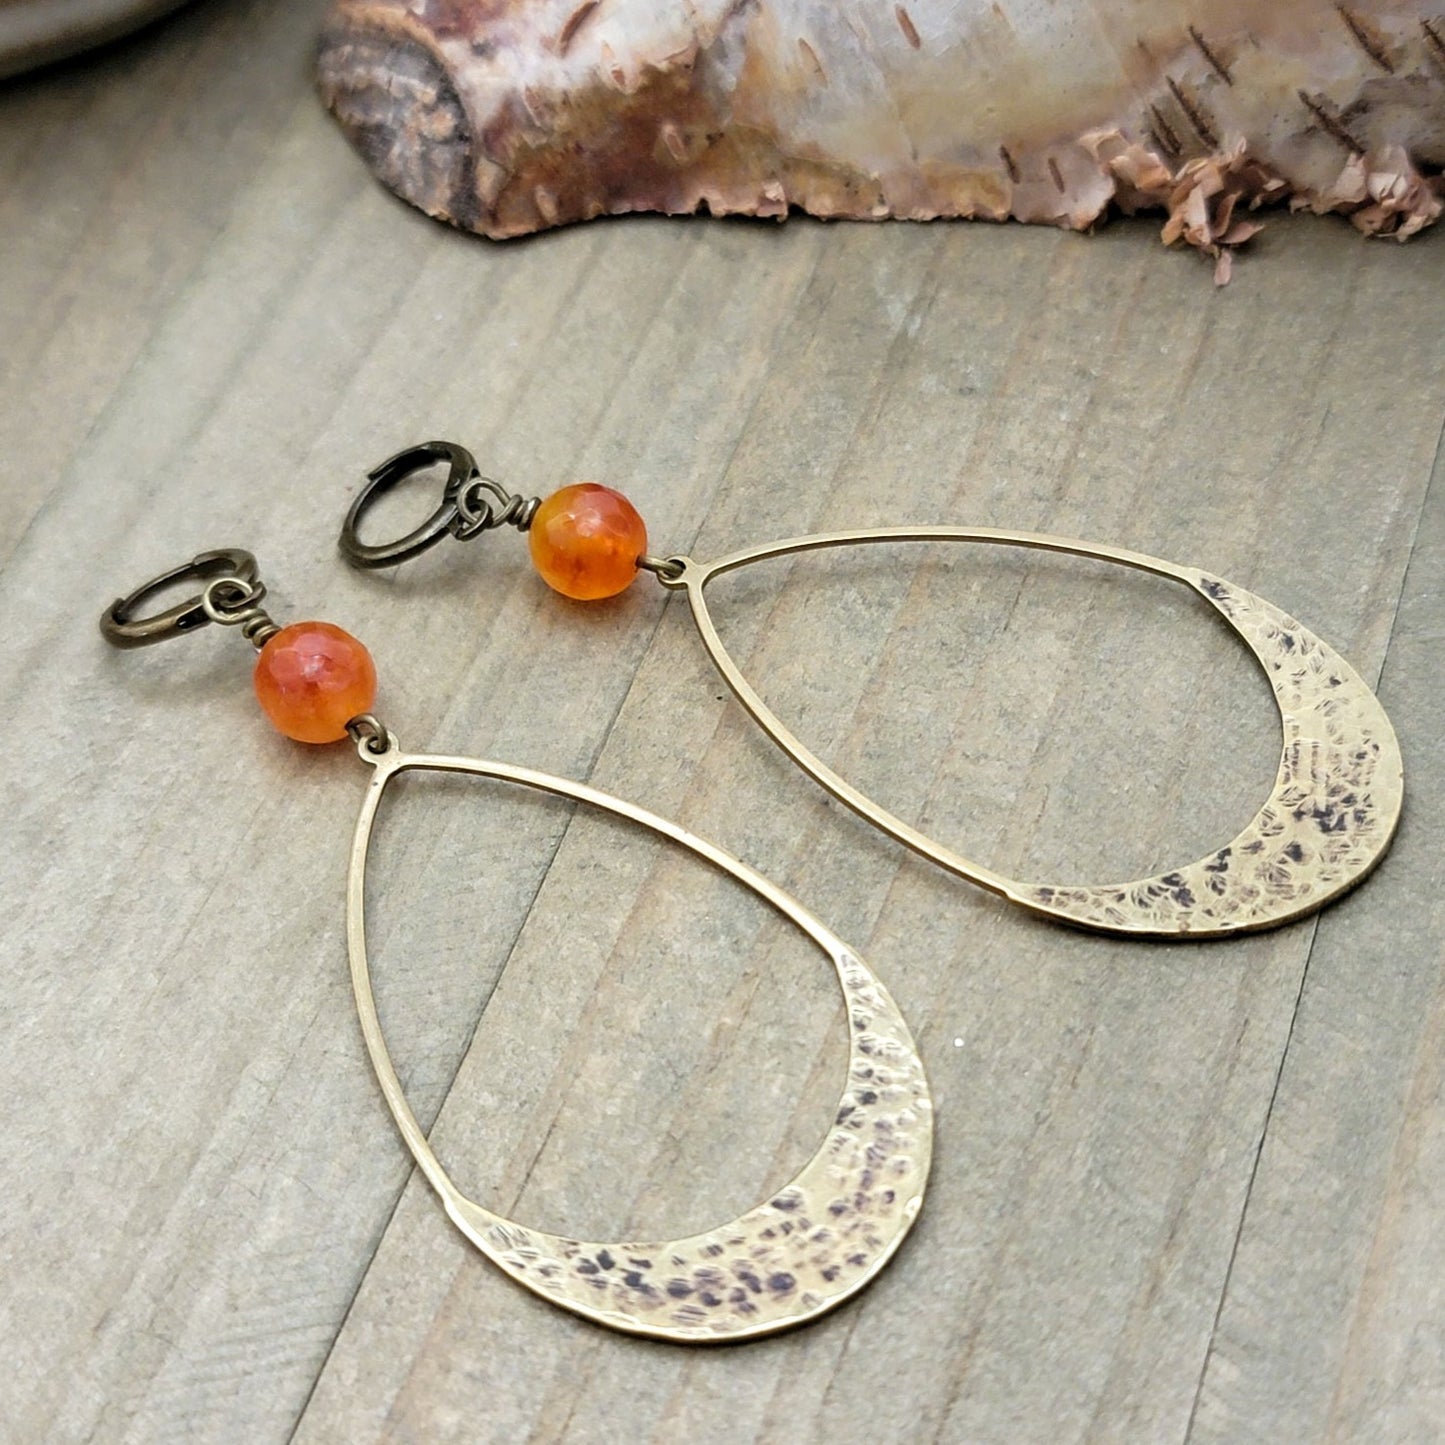 Textured Brass Oval Earrings with Earthy Agate - Nicki Lynn Jewelry